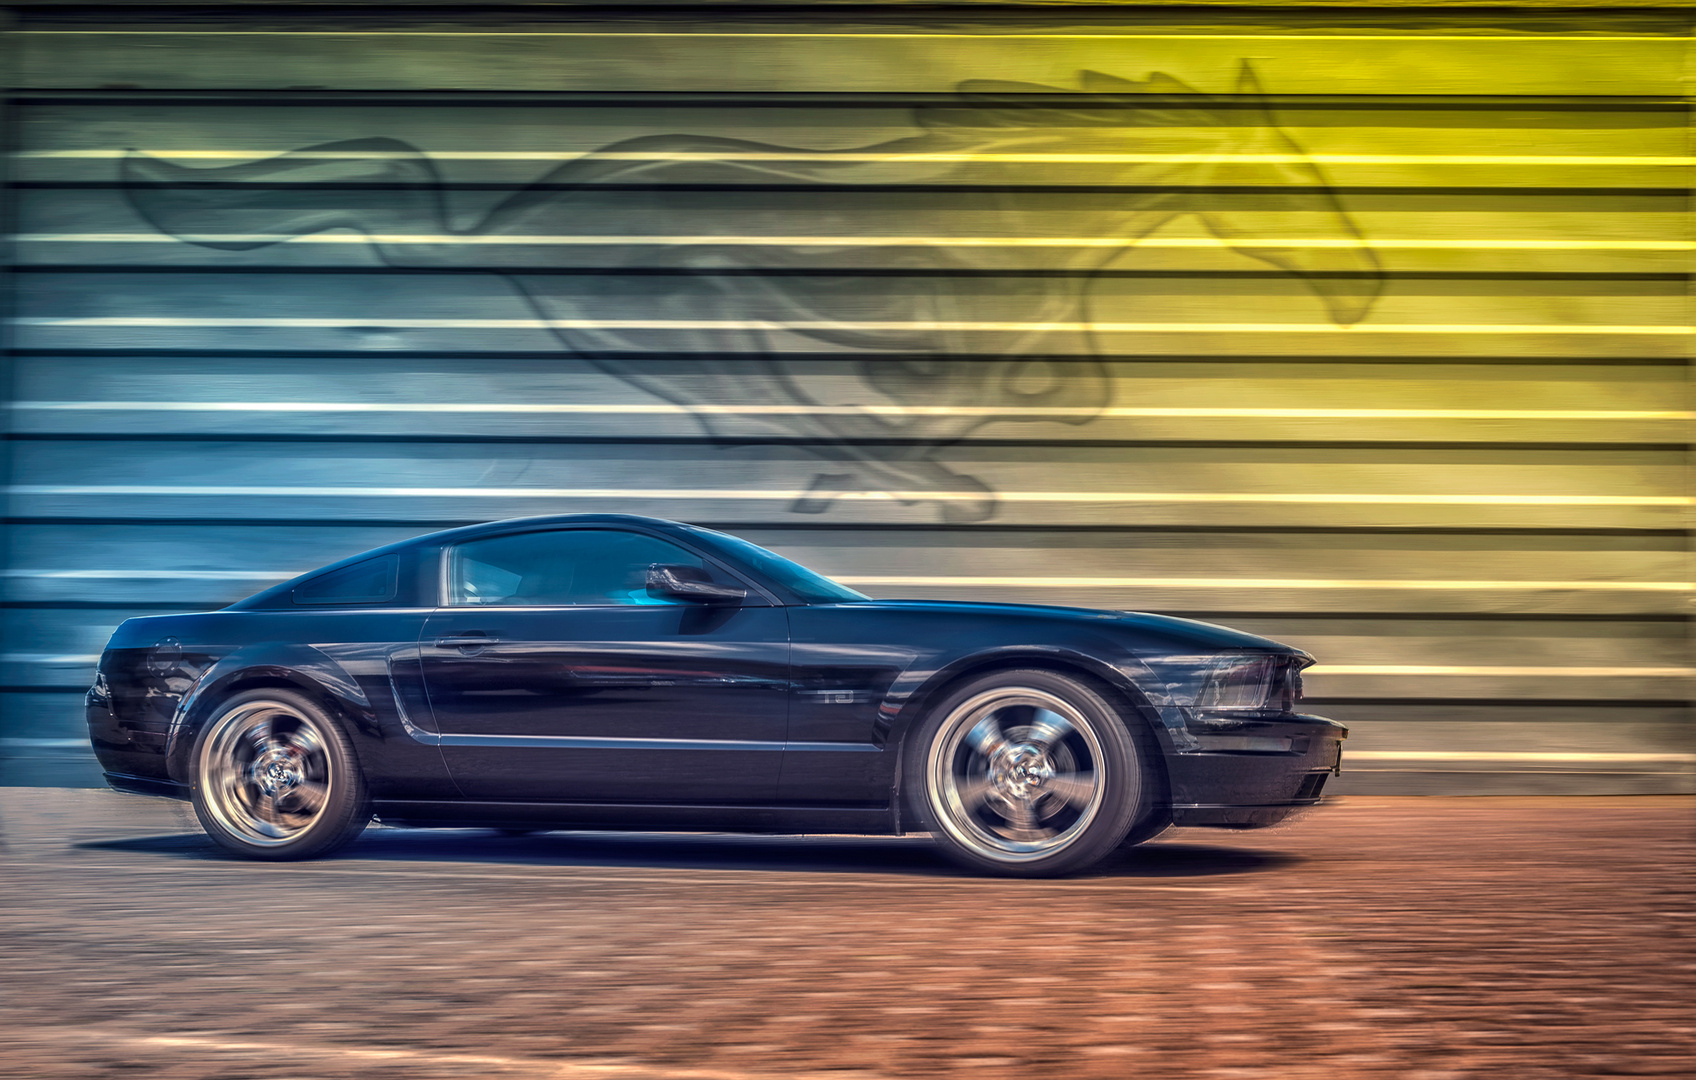 Mustang 1